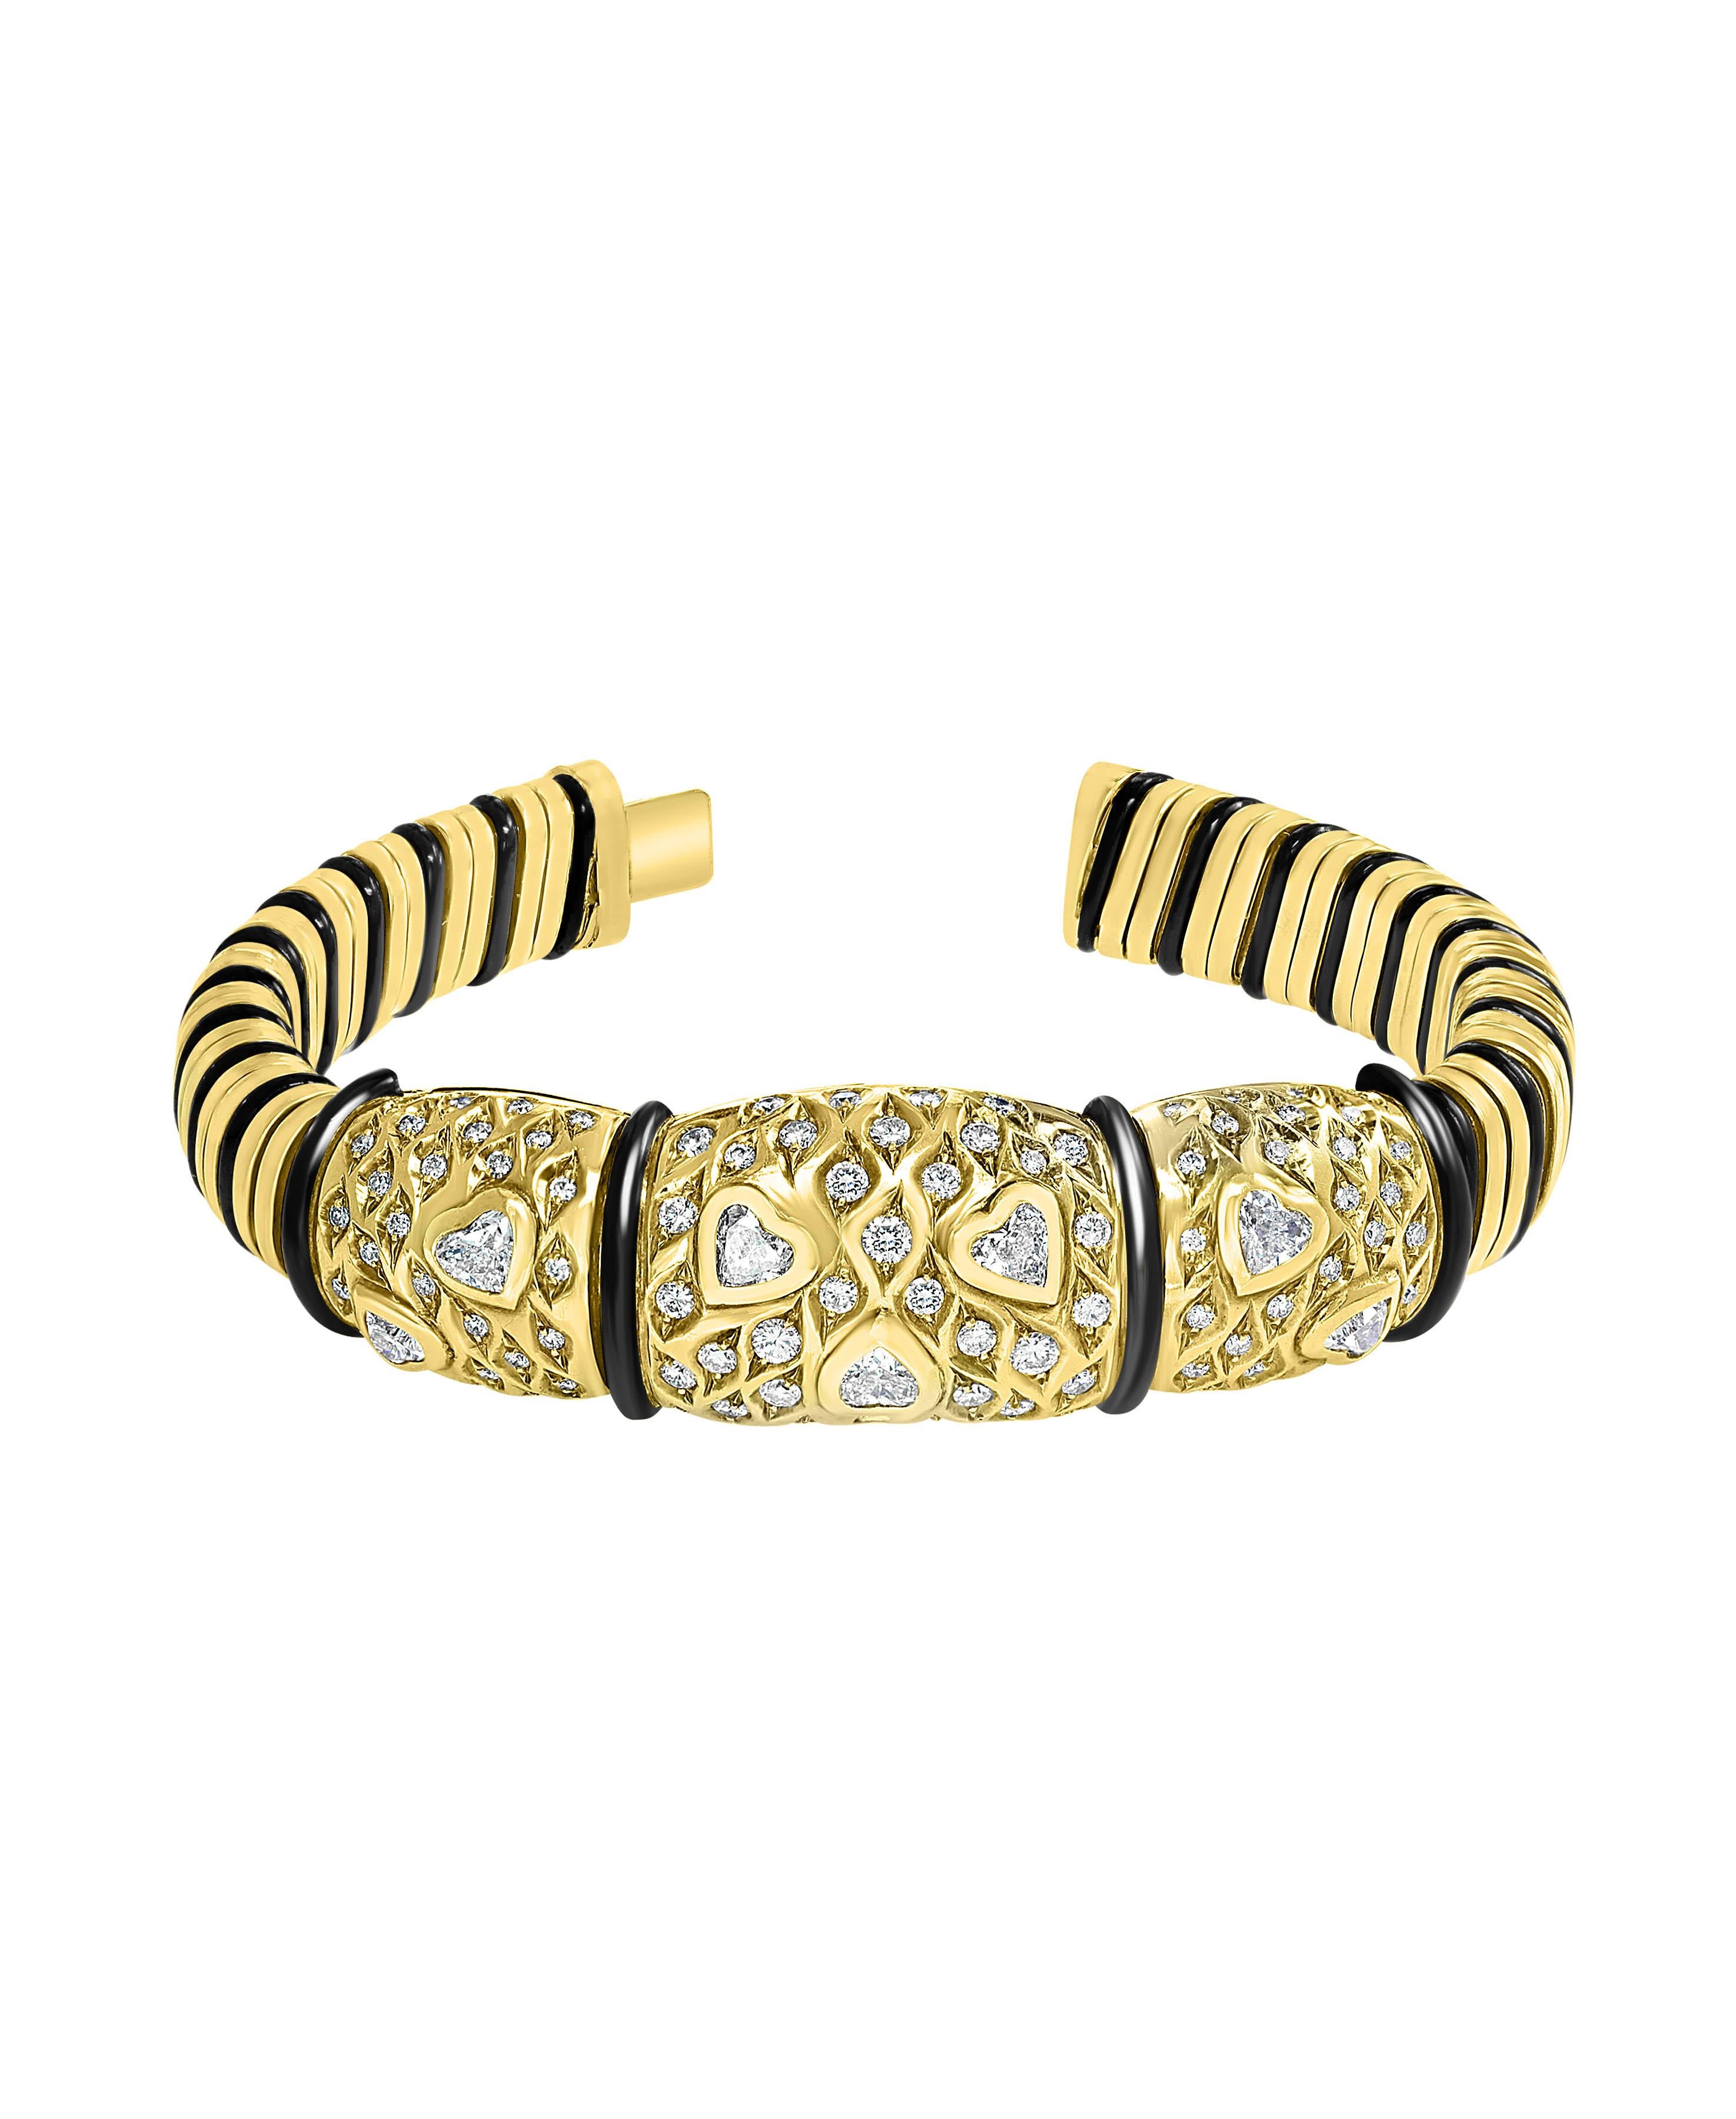 Leporttie Diamond Bangle Ring Earring Three-Piece Set in 18 Karat Yellow Gold For Sale 2